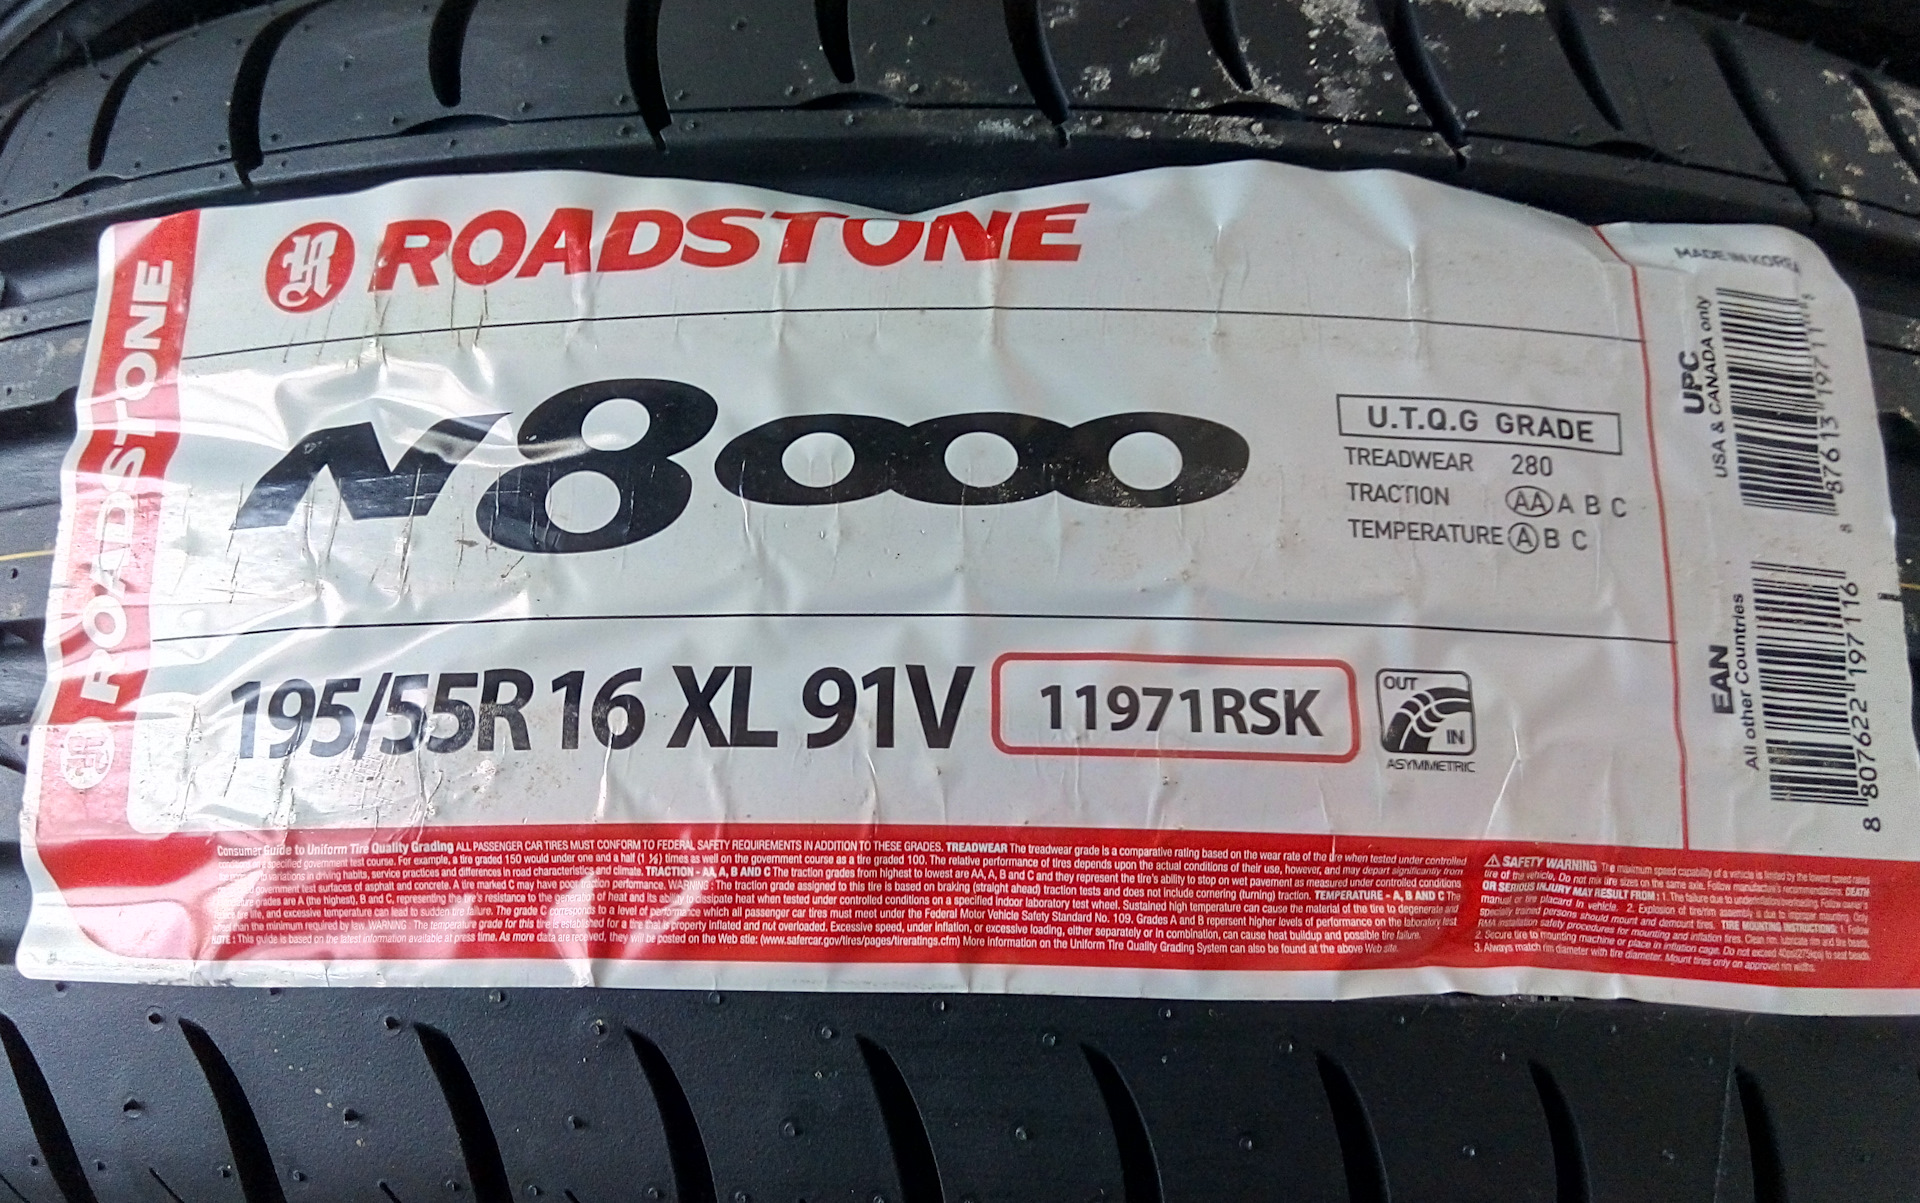 Ikon tyres 195 55 r16. Roadstone n8000. Roadstone r11971. Nexen n8000 195/55 r16. Roadstone 195/55/16 91v n8000 XL.